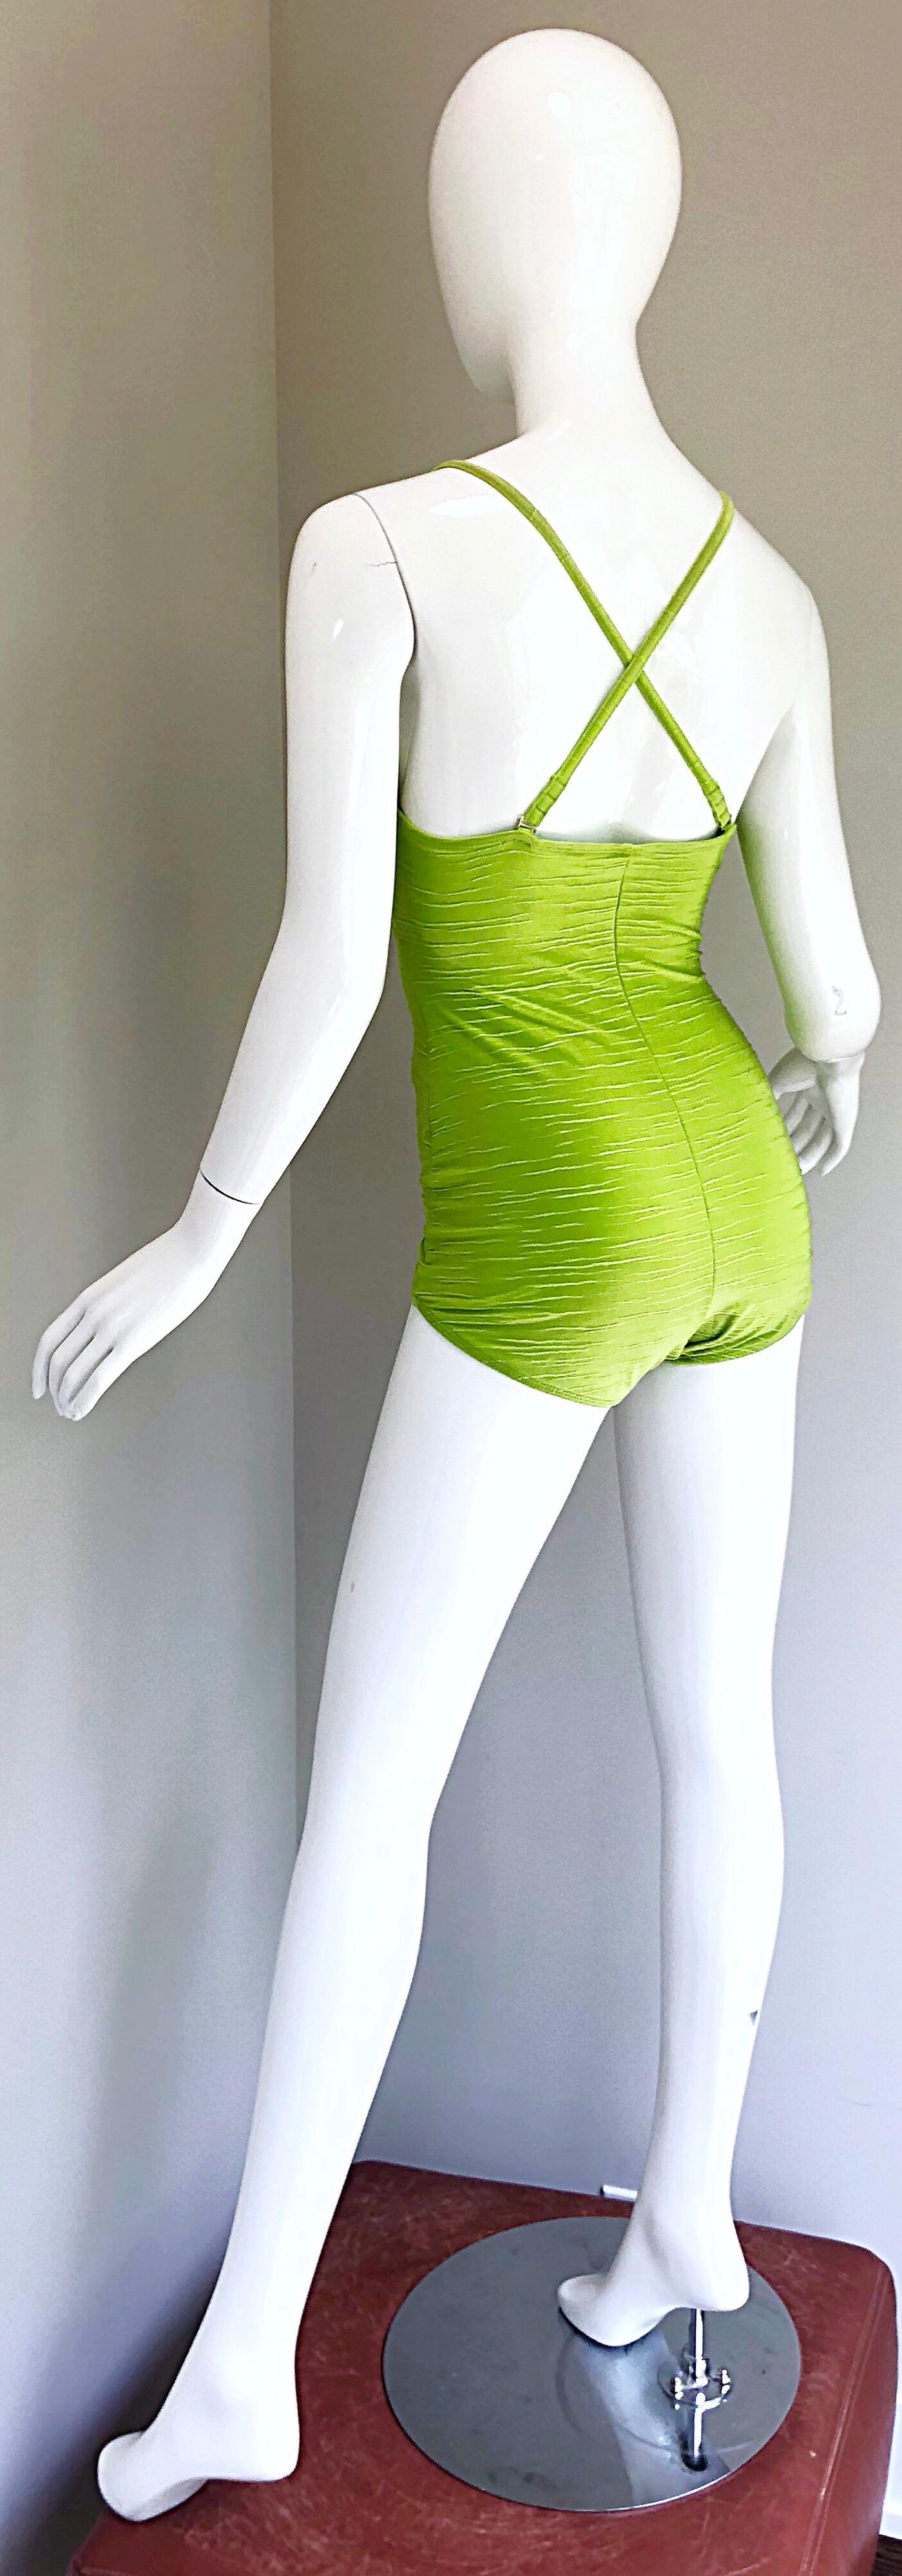 Size 14 Oscar de la Renta Neon Lime Green One Piece 60s Style Swimsuit Bodysuit For Sale 6